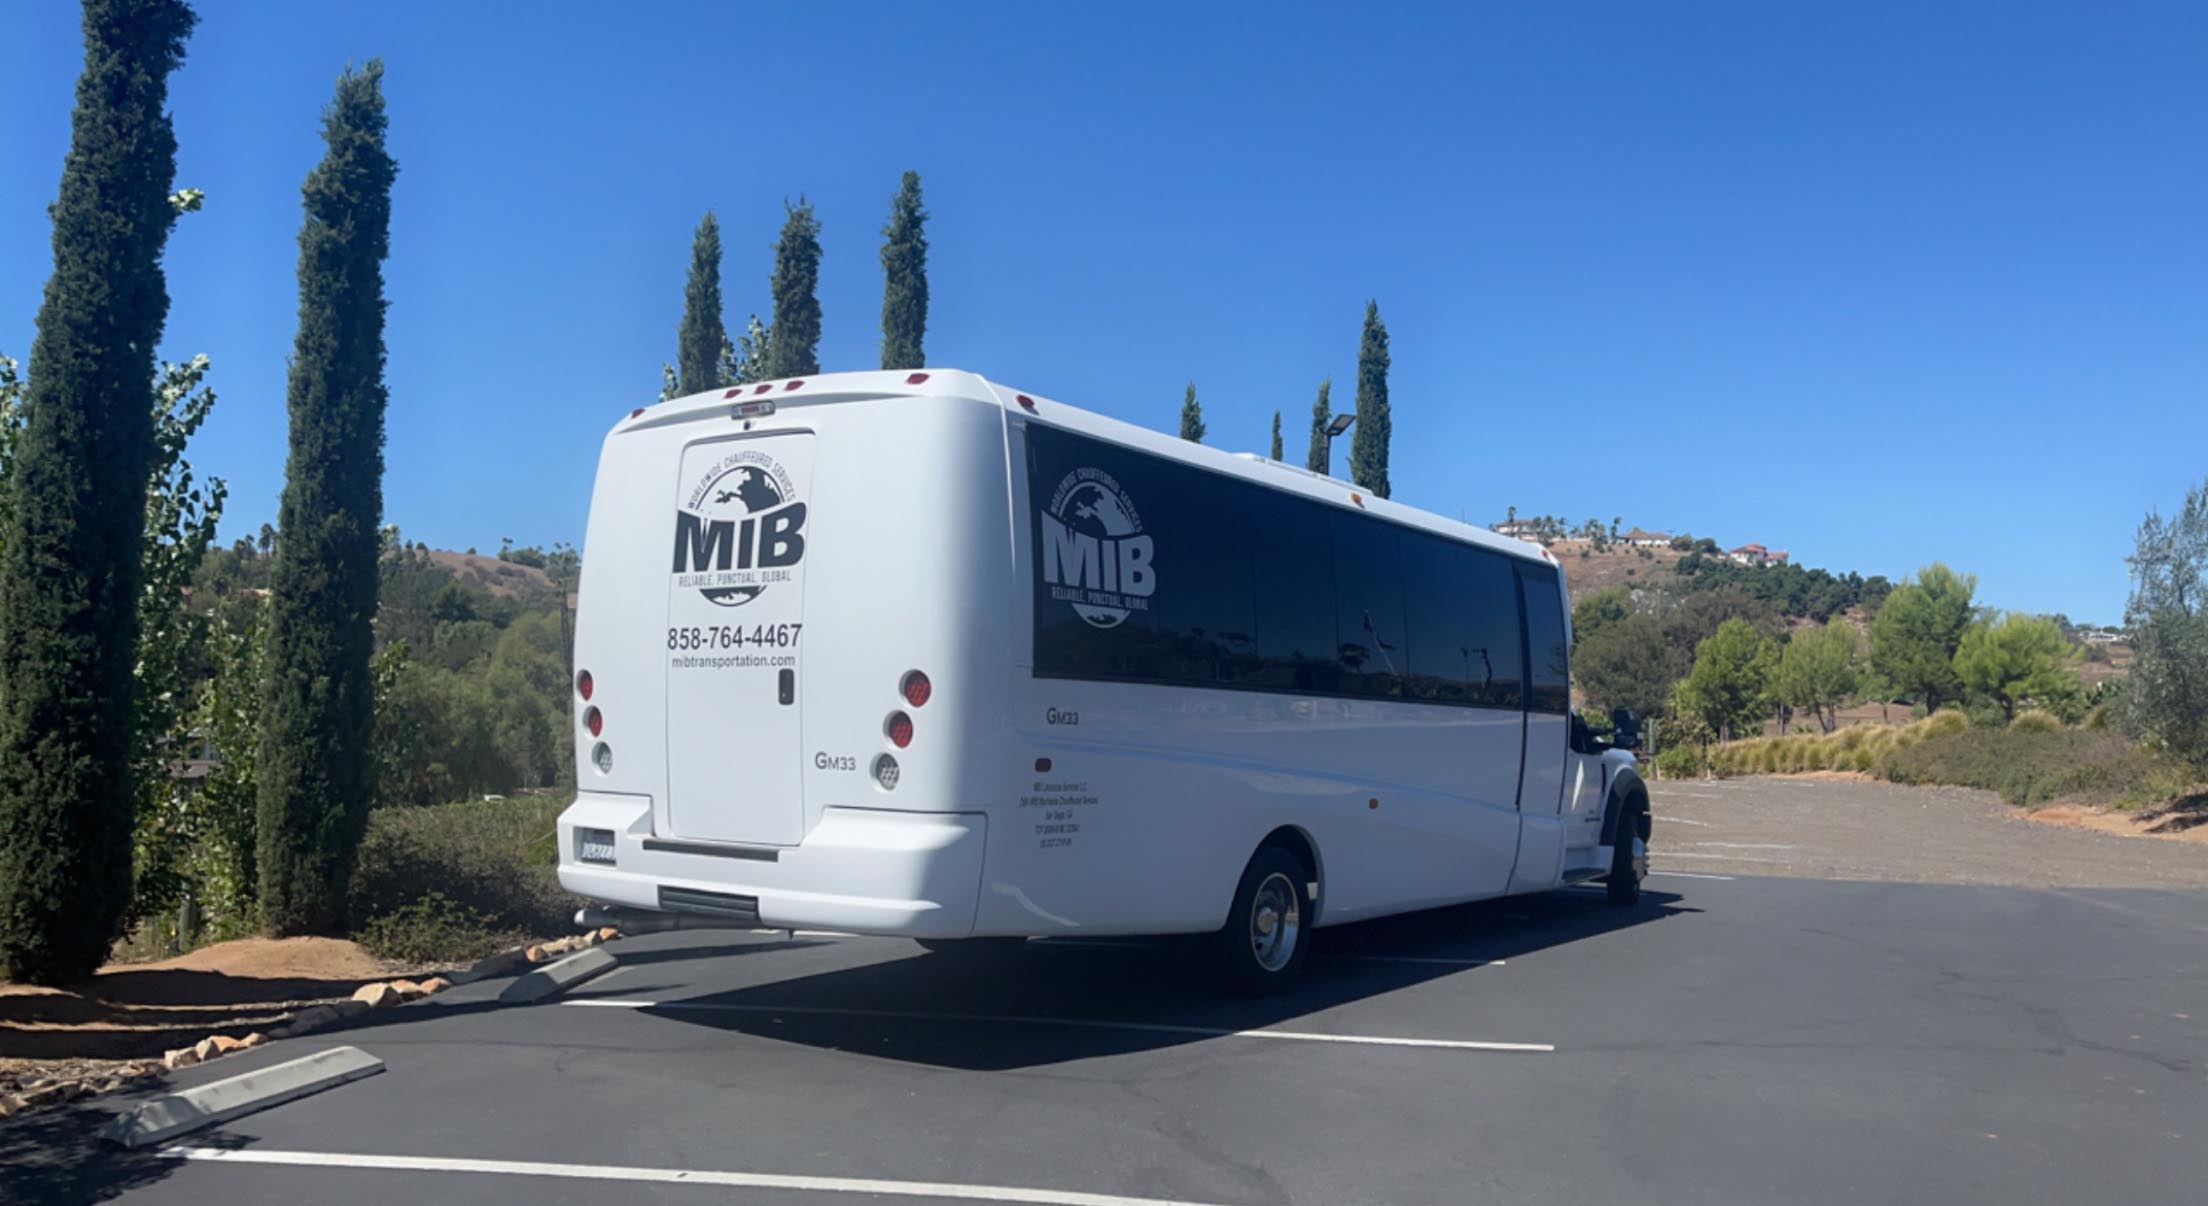 San Diego Mini Bus Rental Info